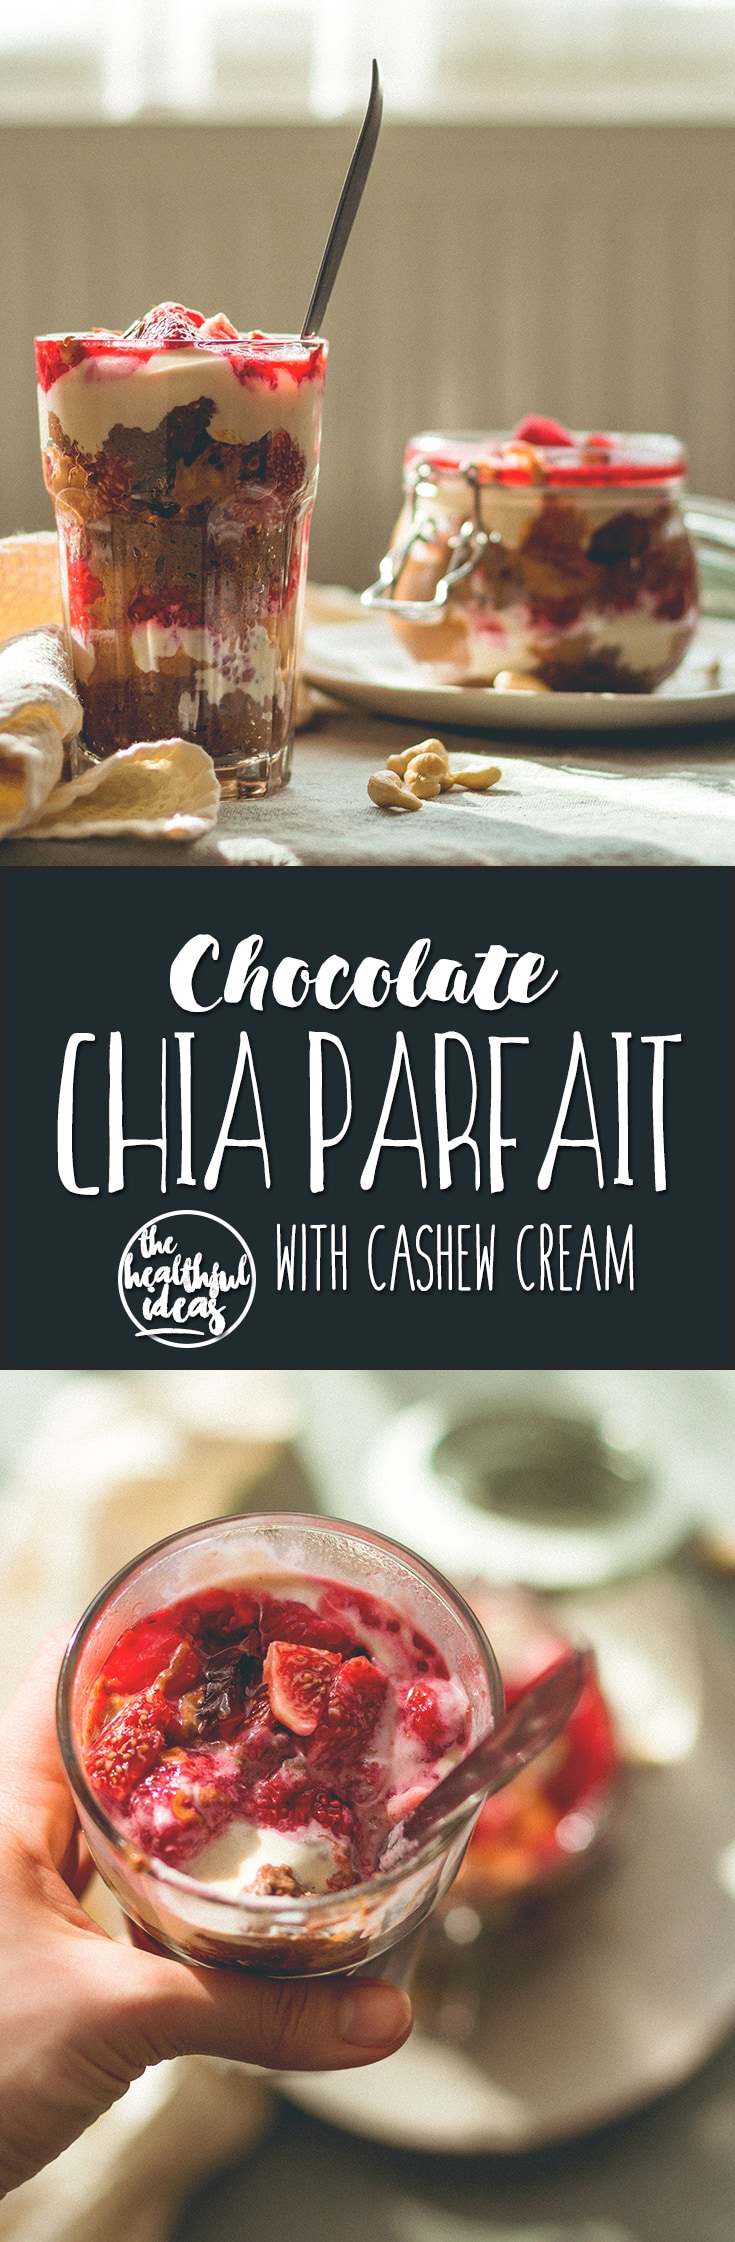 Chocolate Chia Parfait with Cashew Cream and Strawberry jam aka the BEST breakfast recipe ever! This parfait is totally amazing, I LOVE it. (vegan, GF) | thehealthfulideas.com